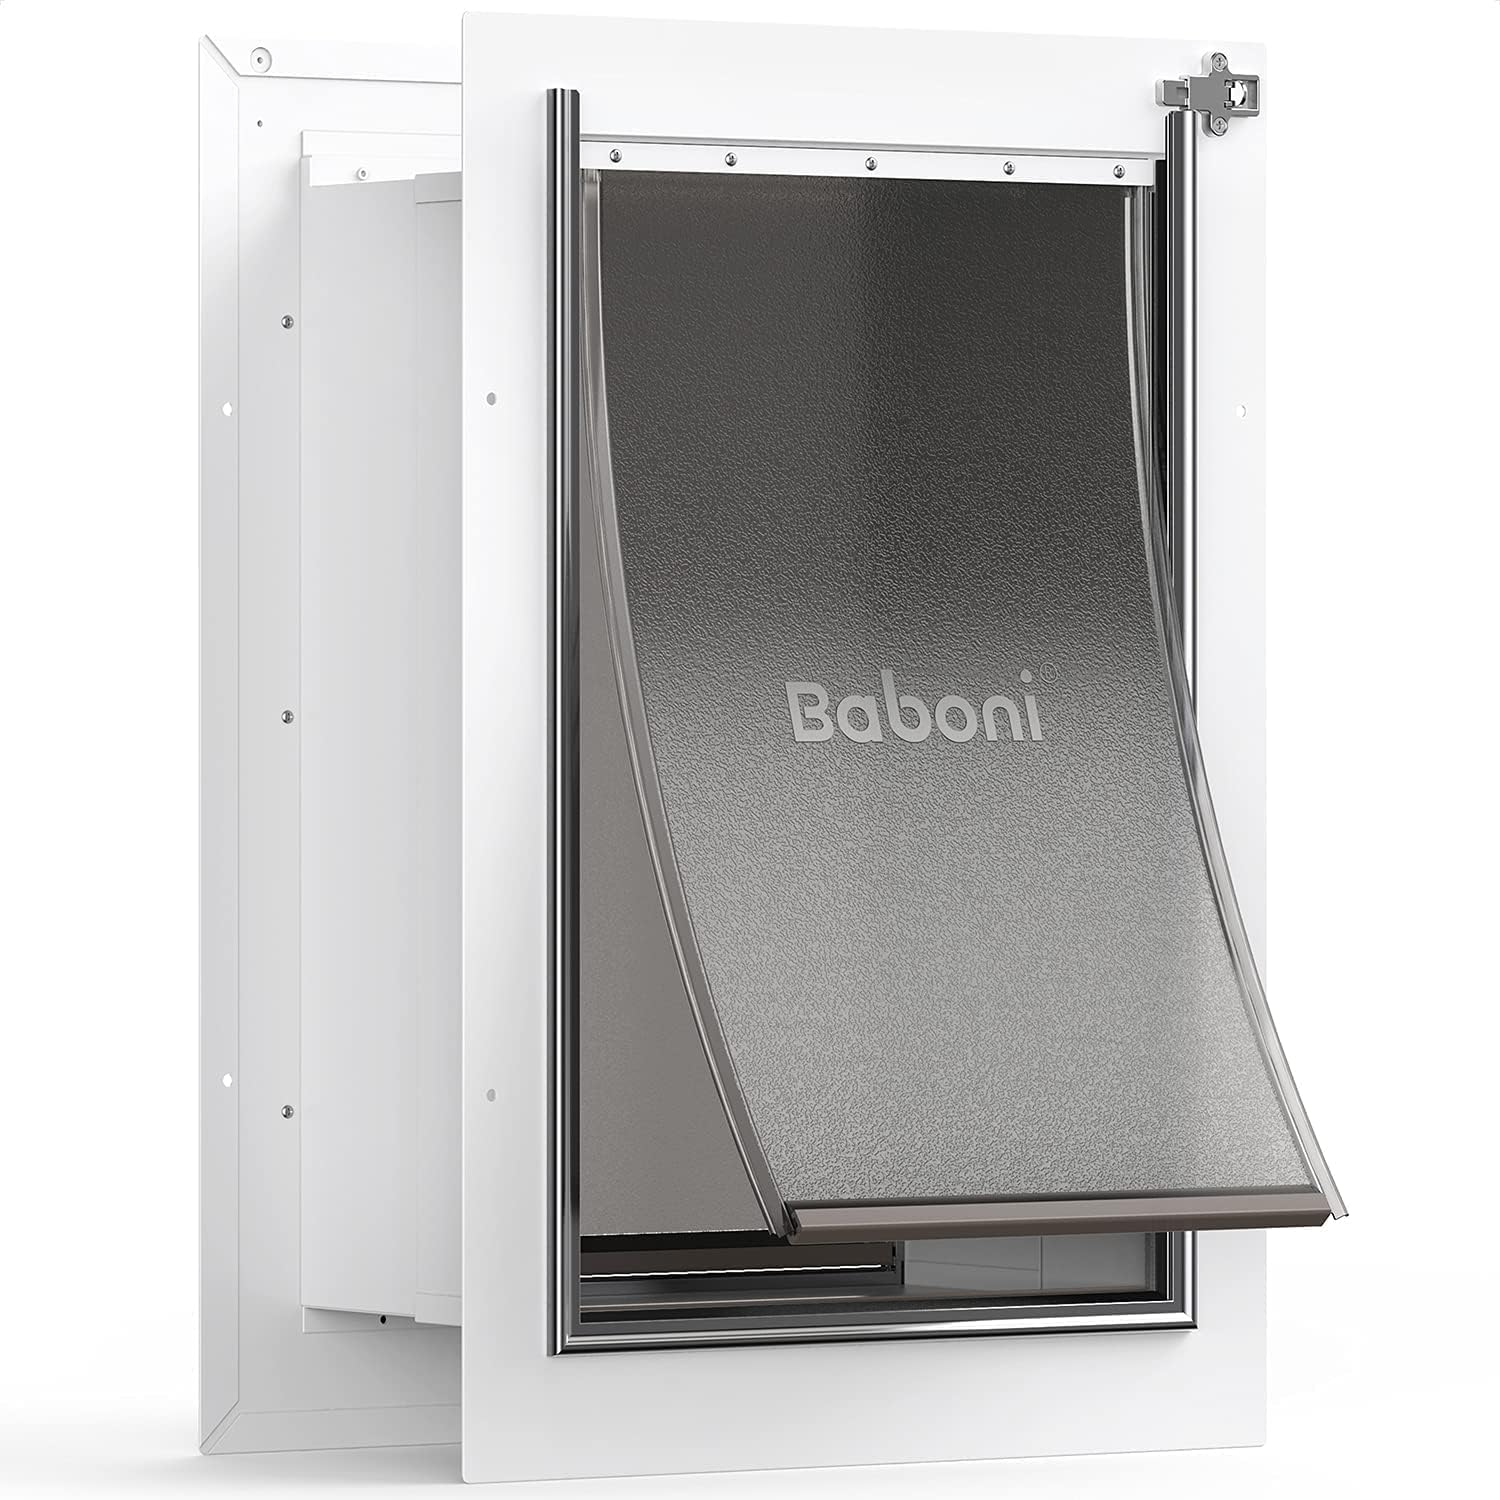 Baboni Pet Door for Wall, Steel Frame and Telescoping [...]